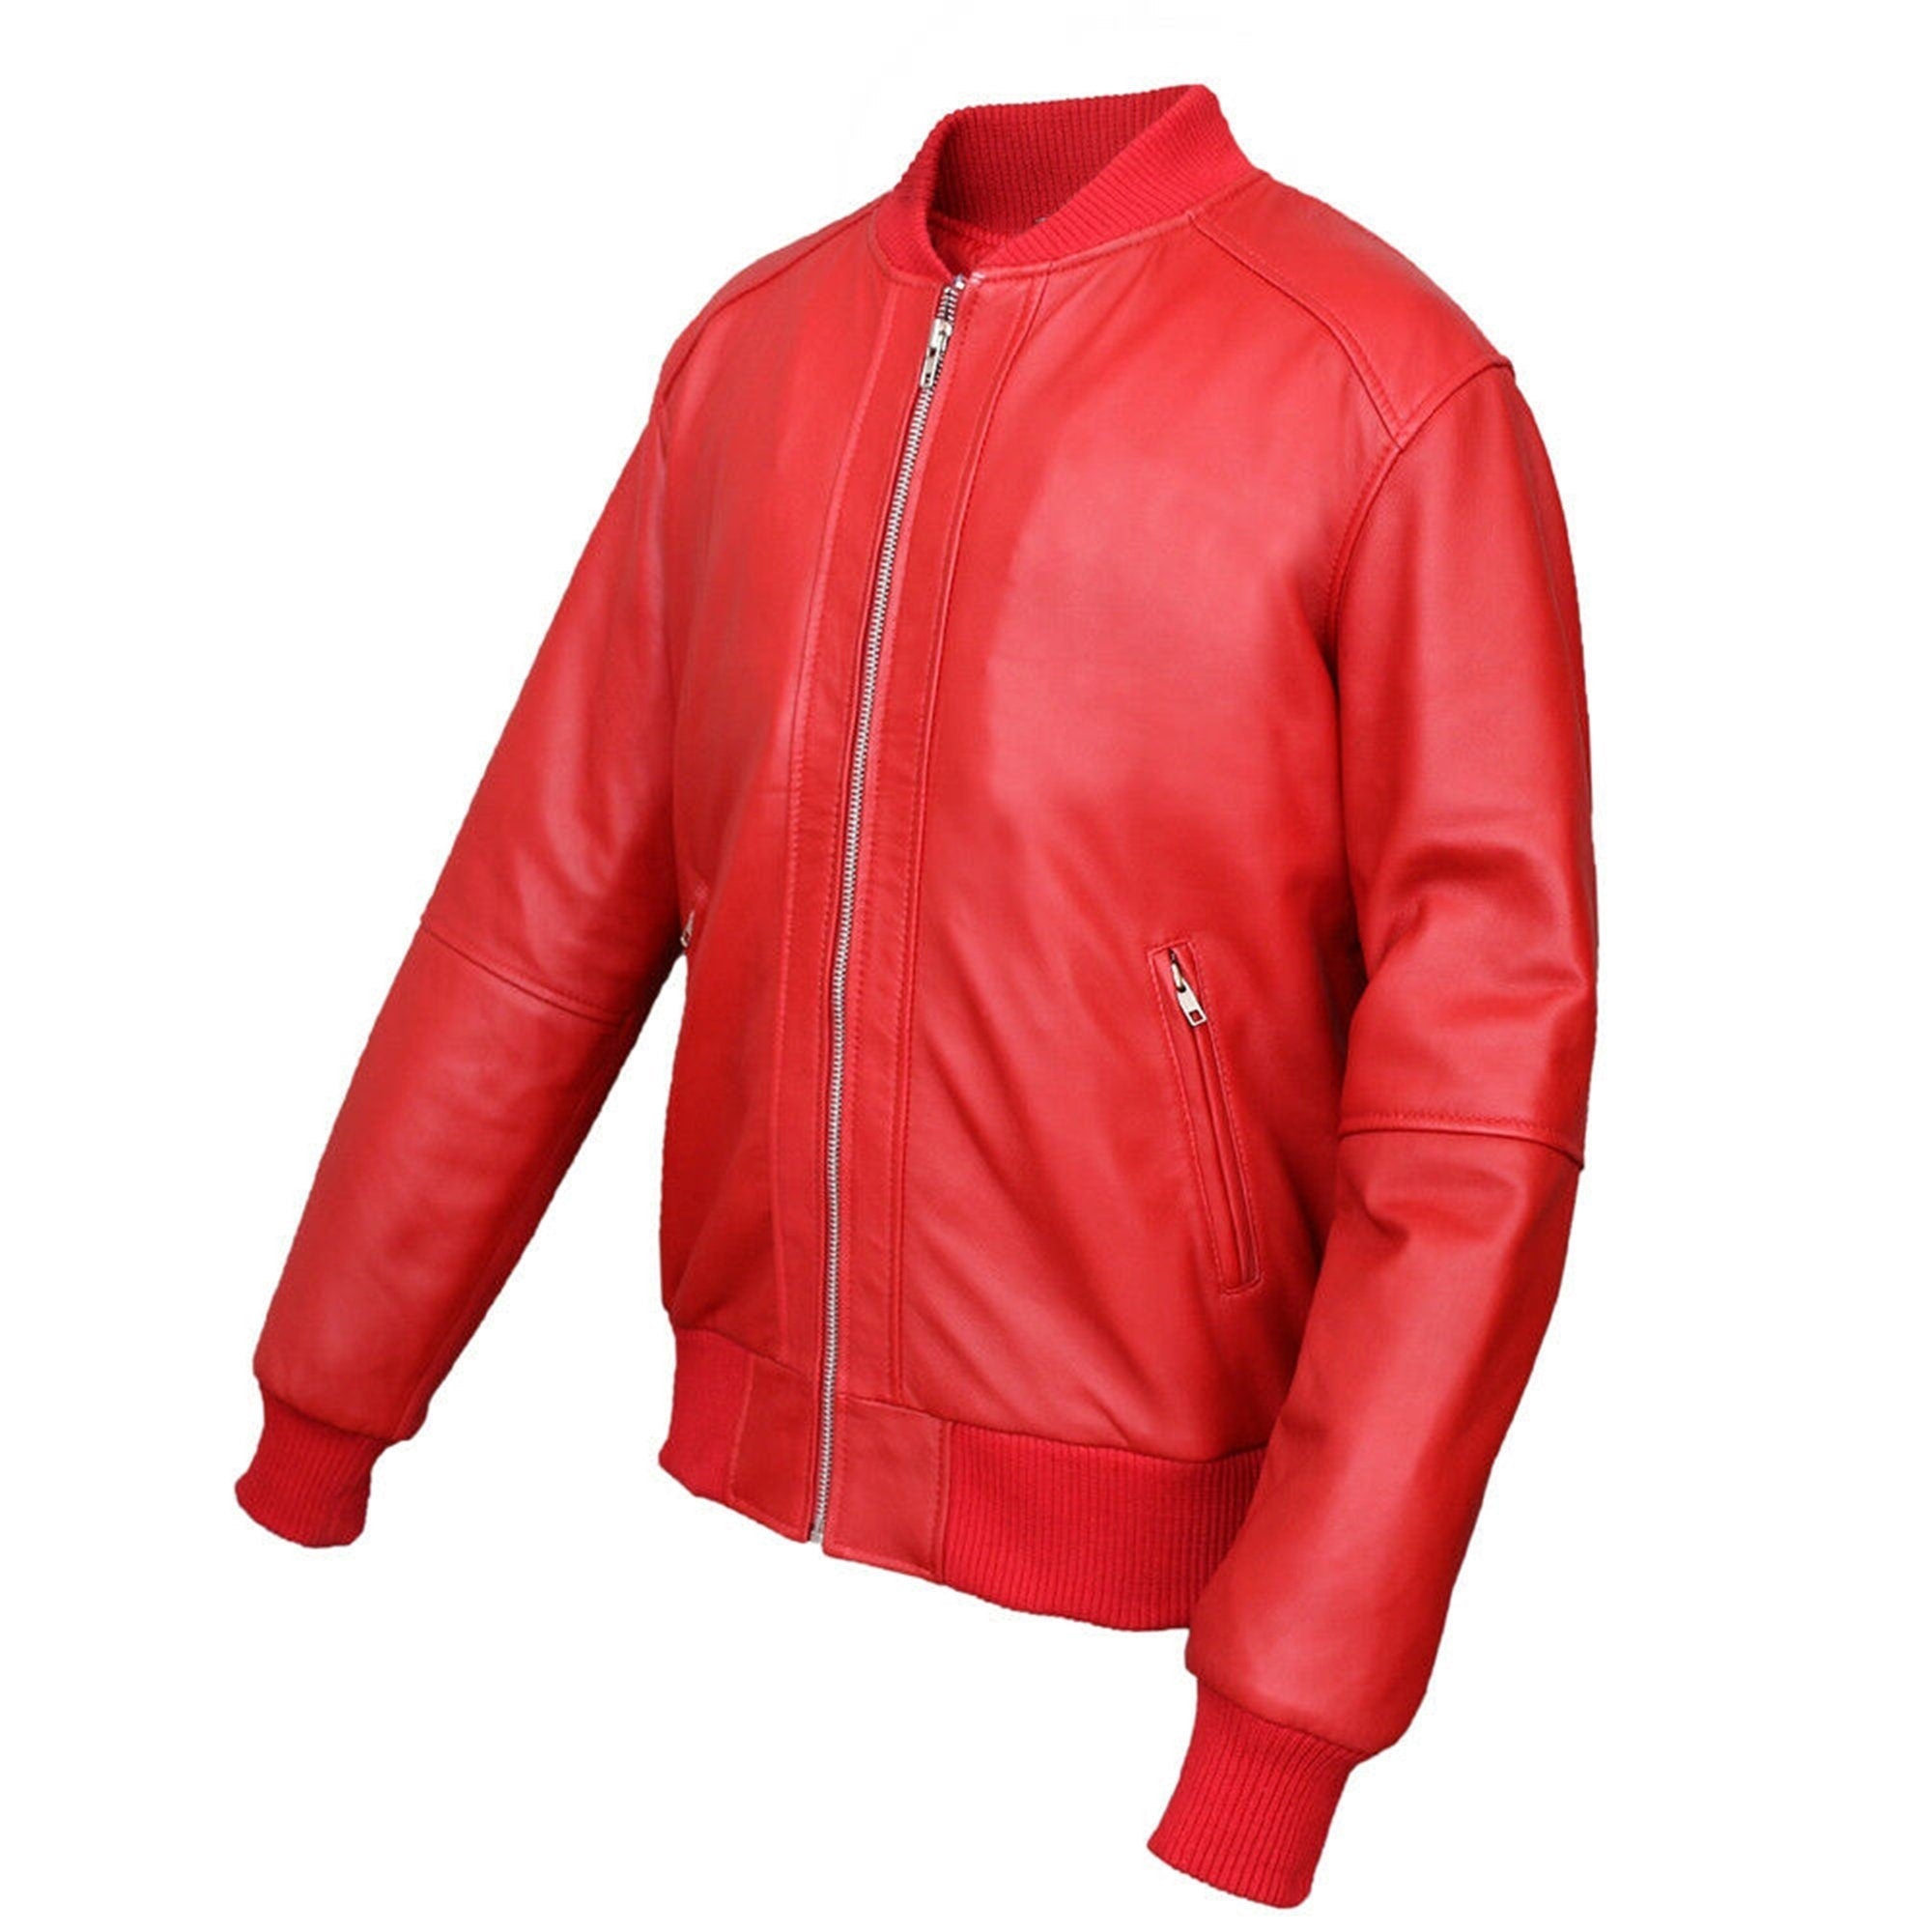 Men's Red Leather Jacket Bomber Leather Jacket